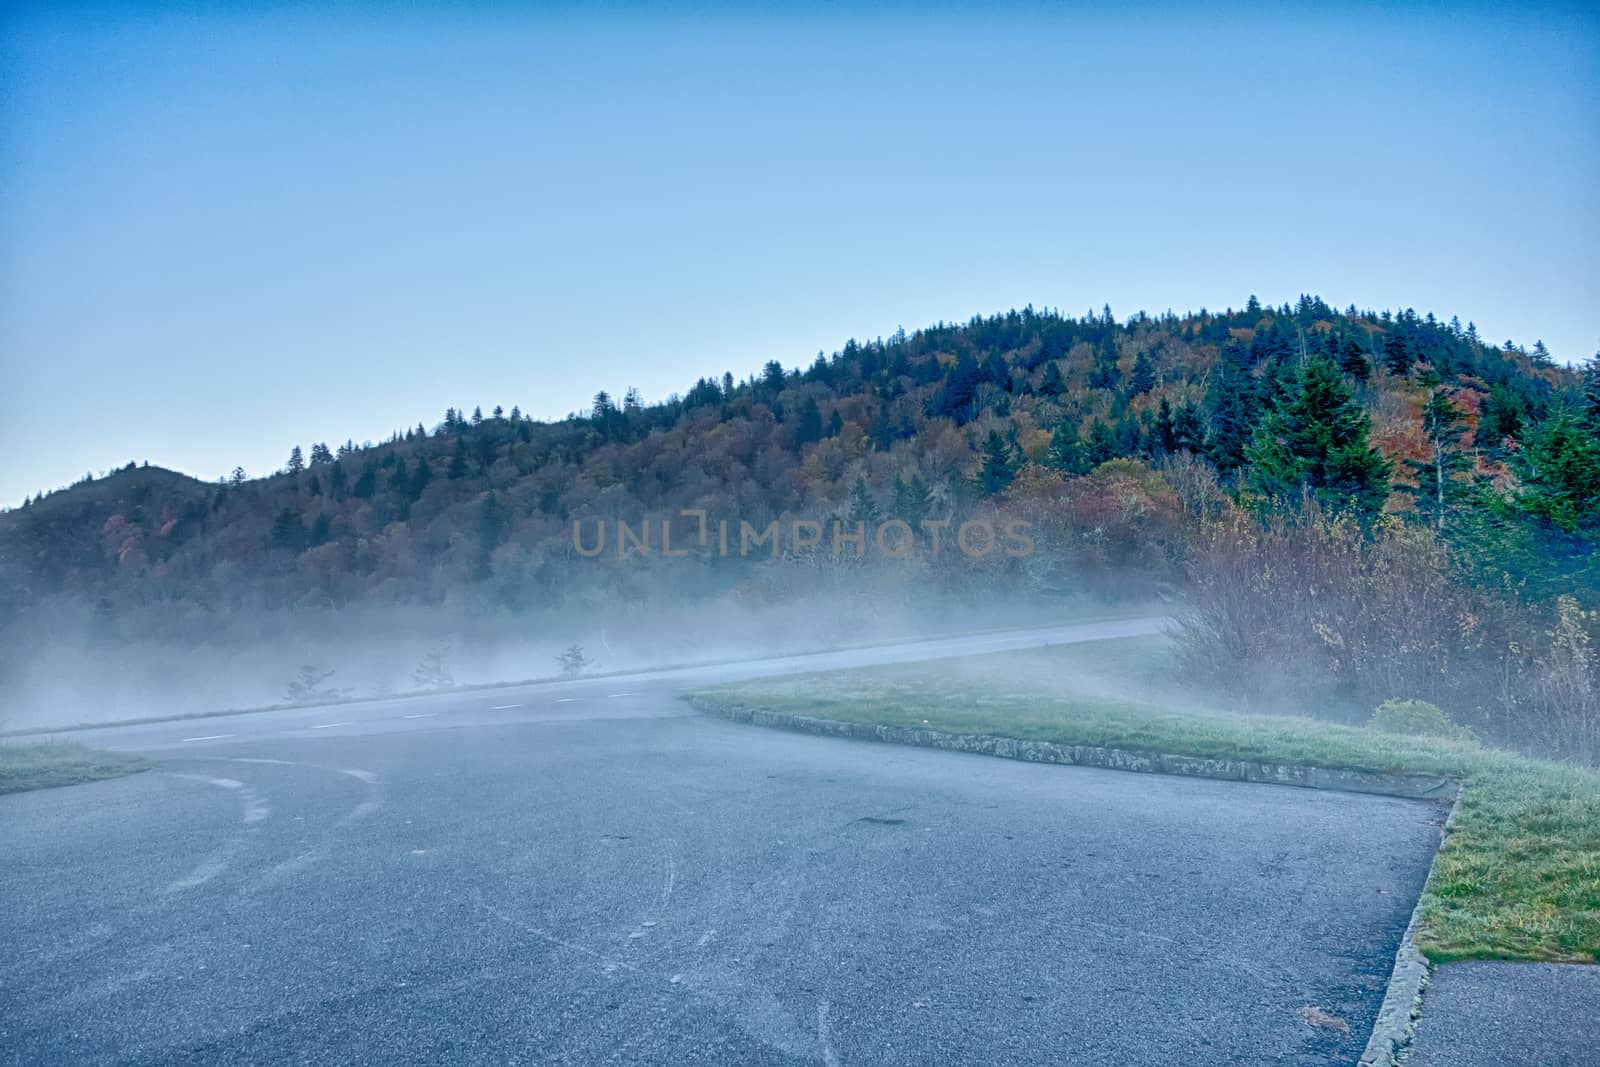 Scenic Blue Ridge Parkway Appalachians Smoky Mountains autumn Landscape